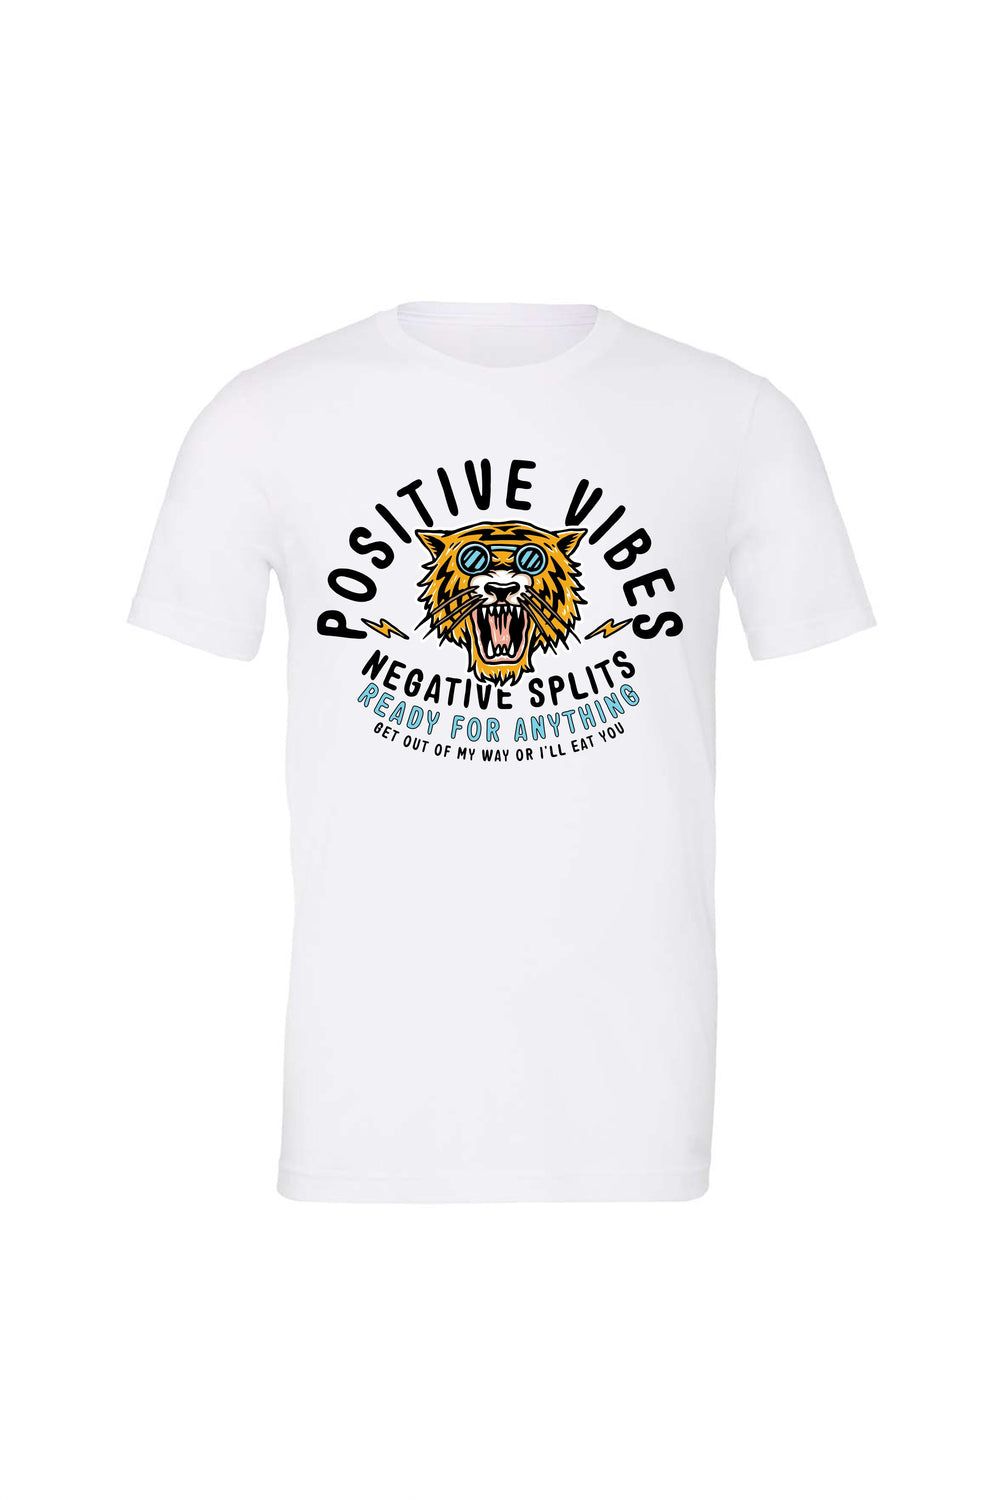 Sarah Marie Design Studio XSmall / White Positive Vibes, Negative Splits Tiger T-Shirt